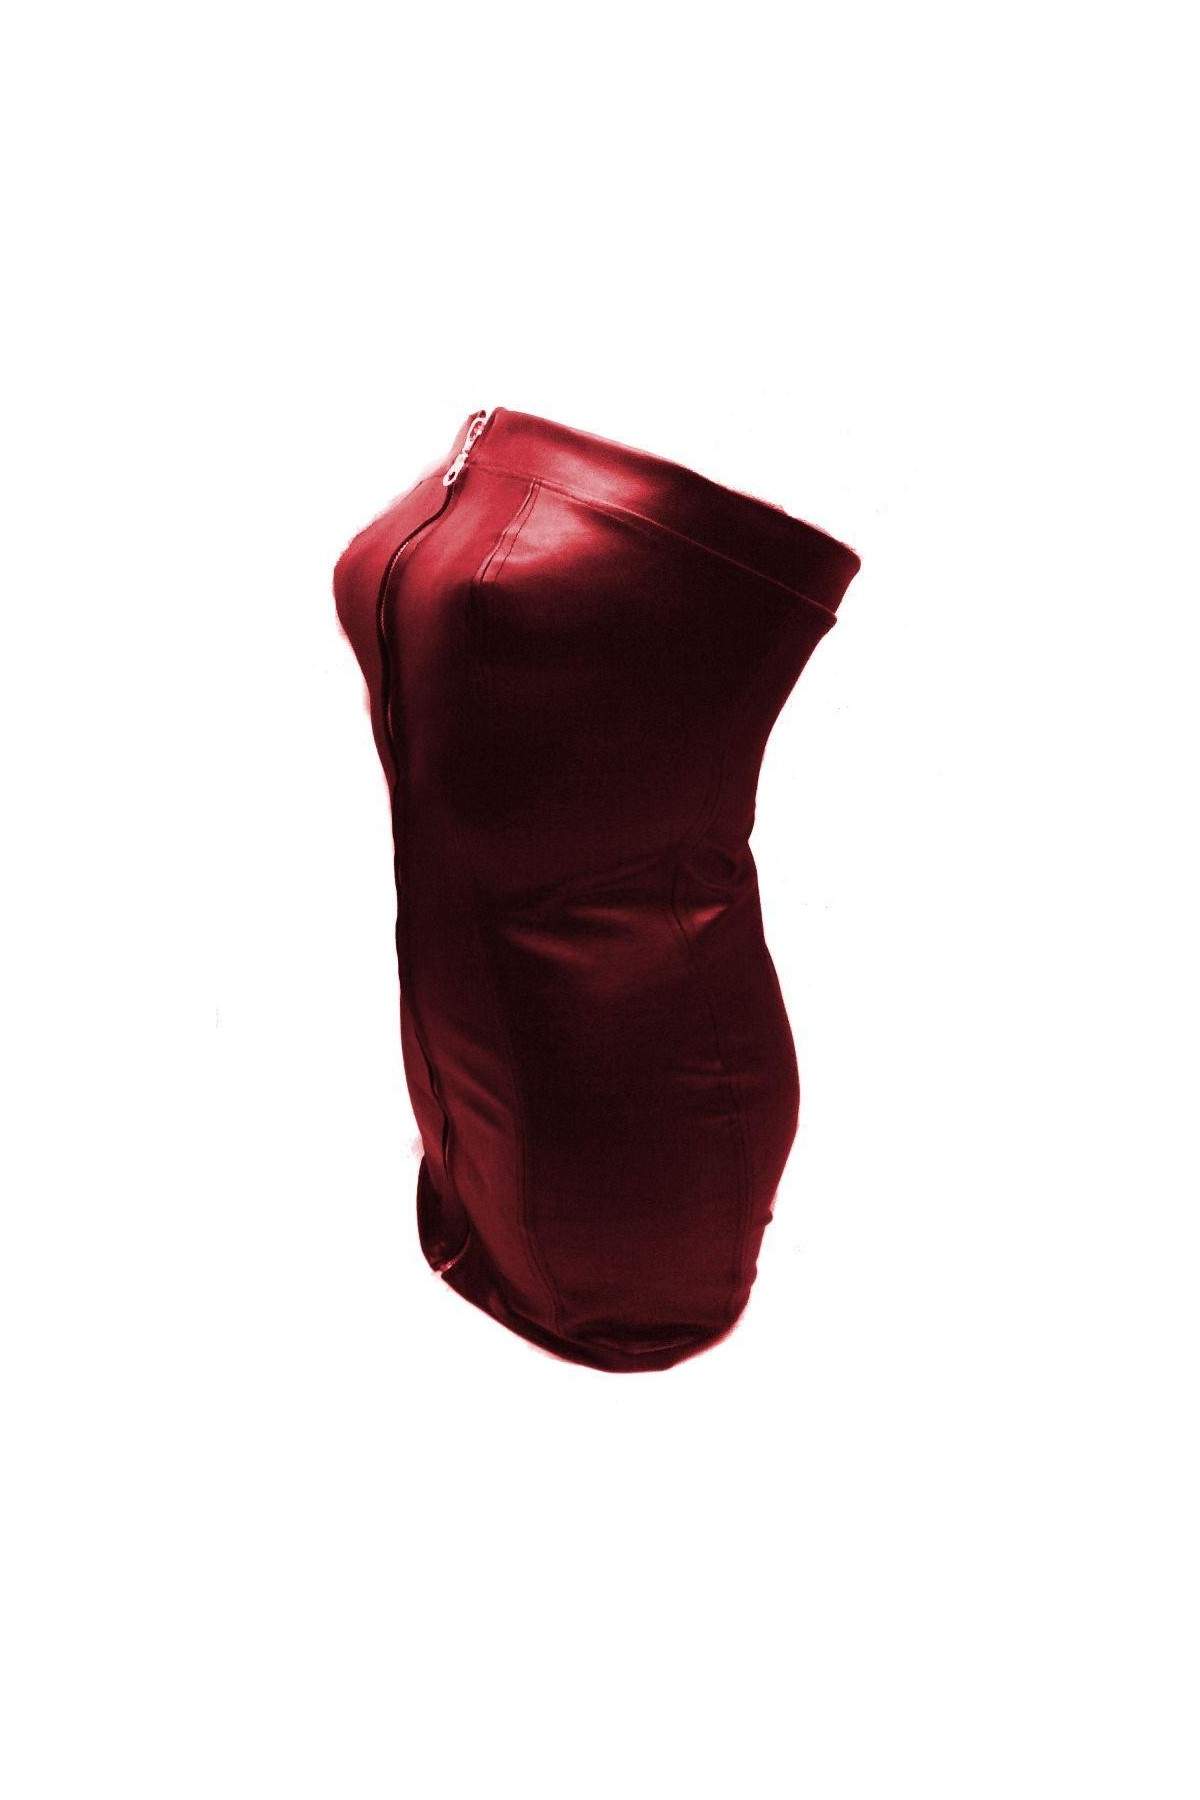 black week Save 15% Soft designer leather dress red size L - XXL (4... - 